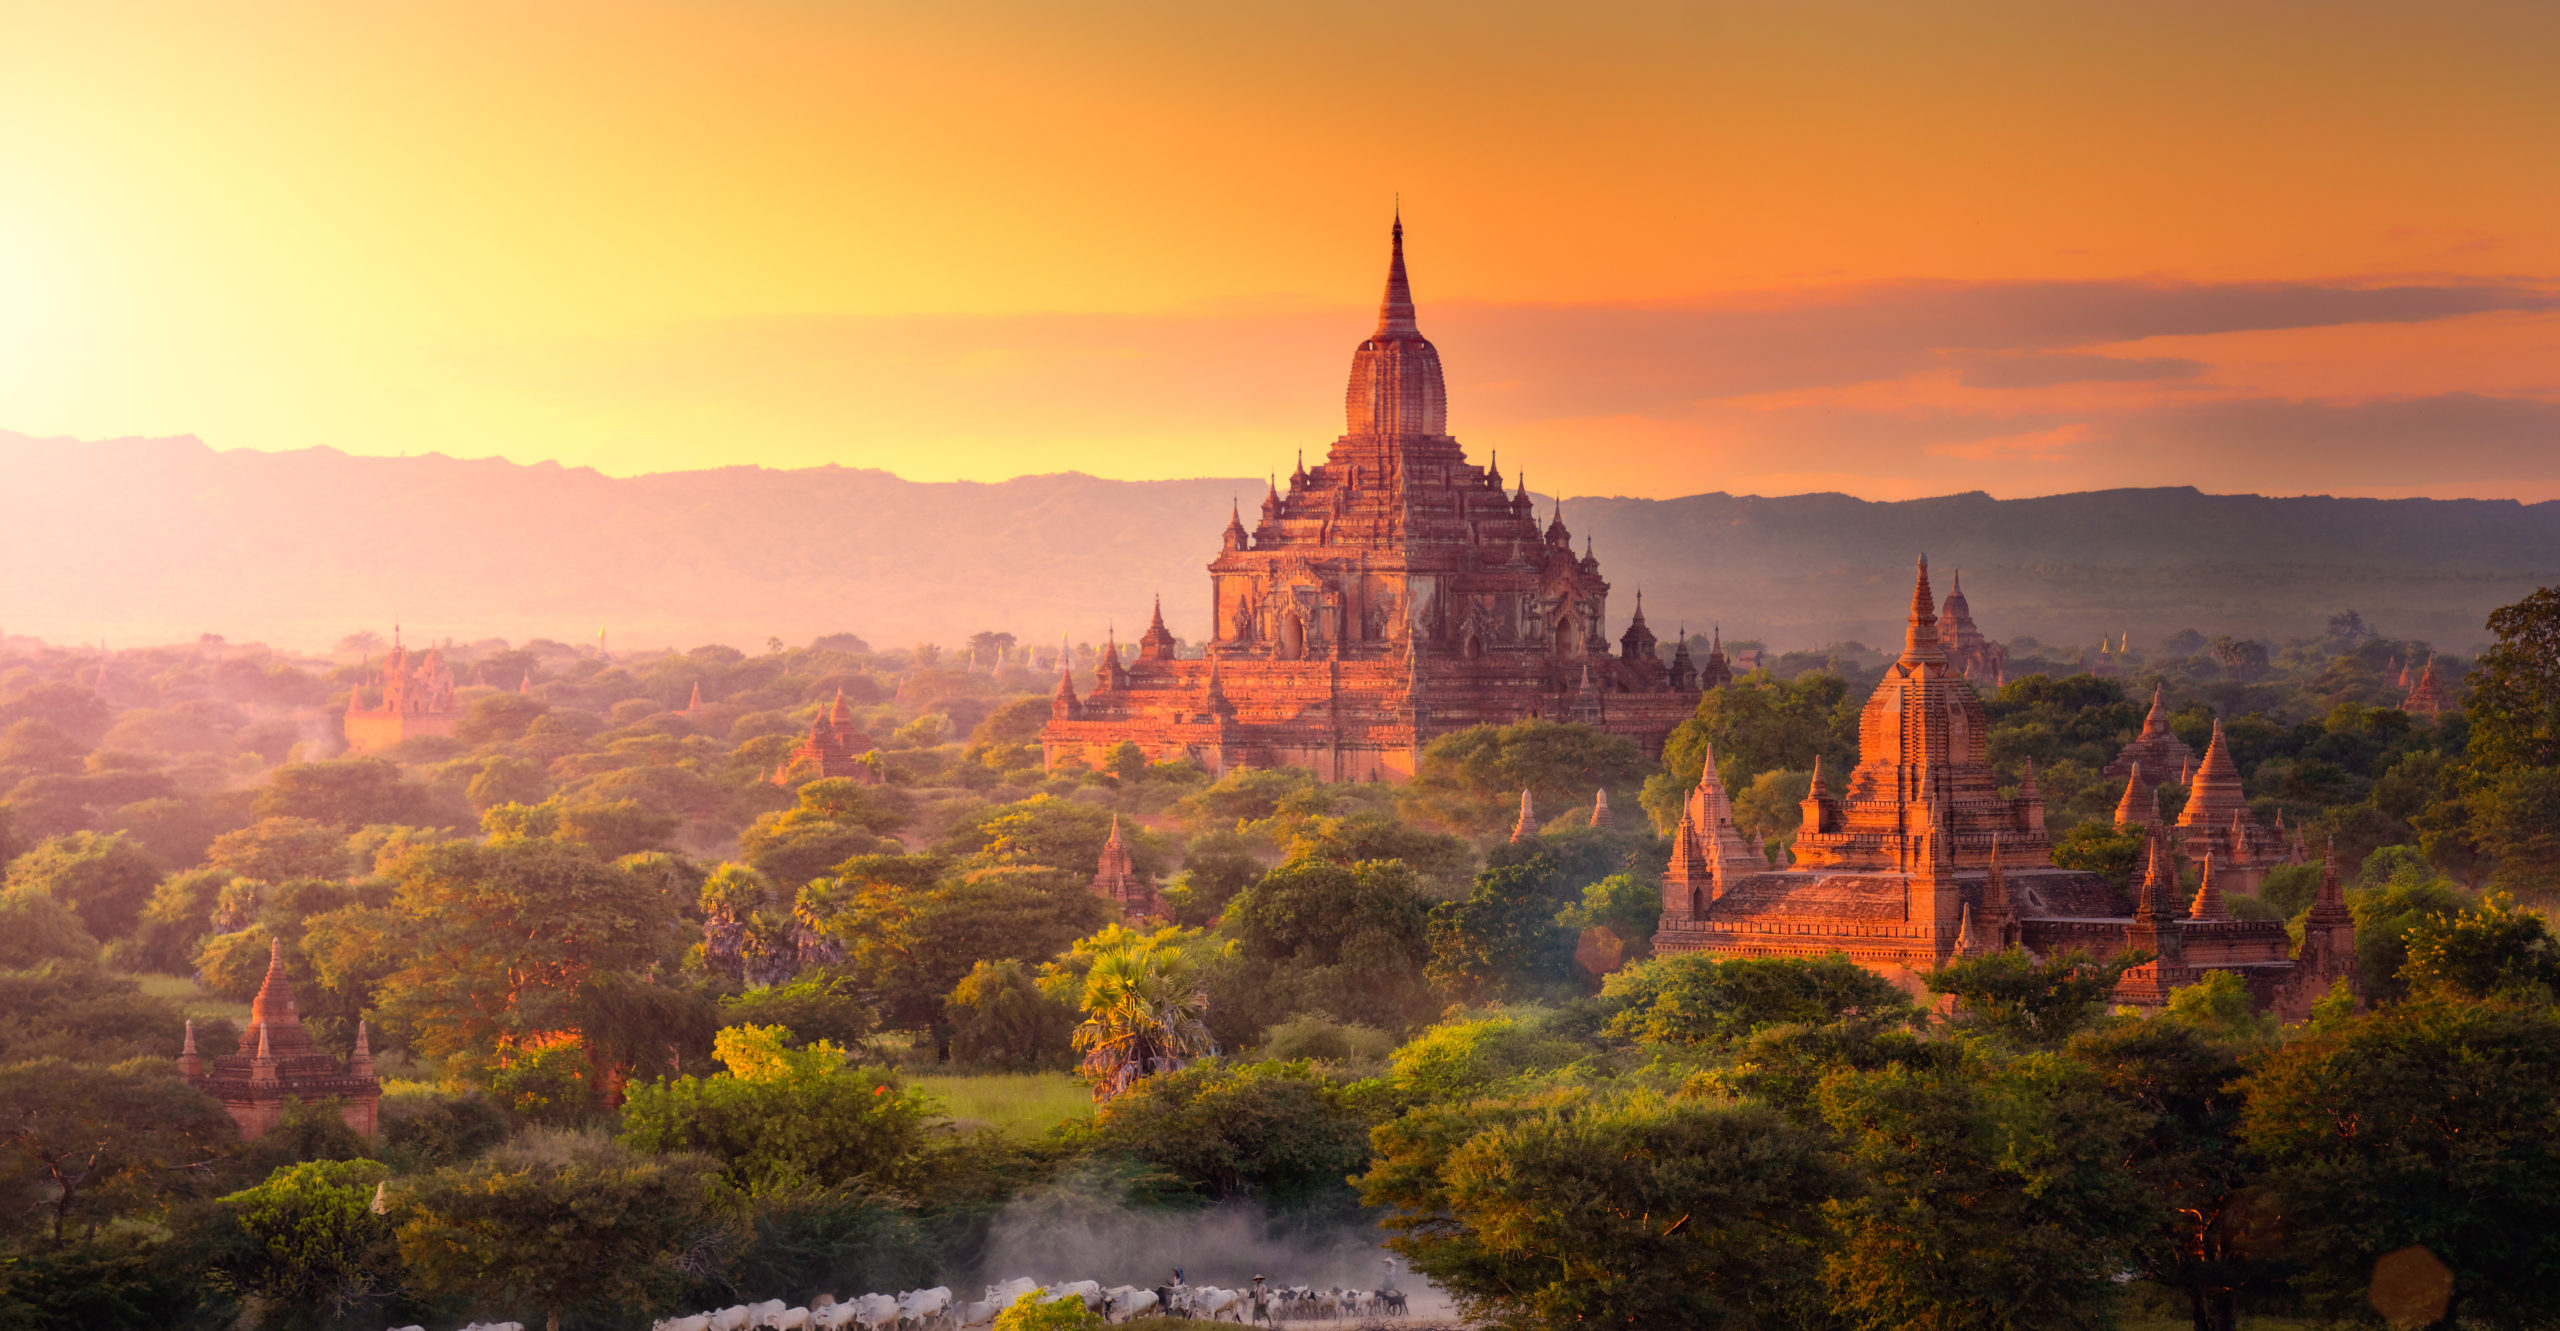 Burma [Shutterstock]